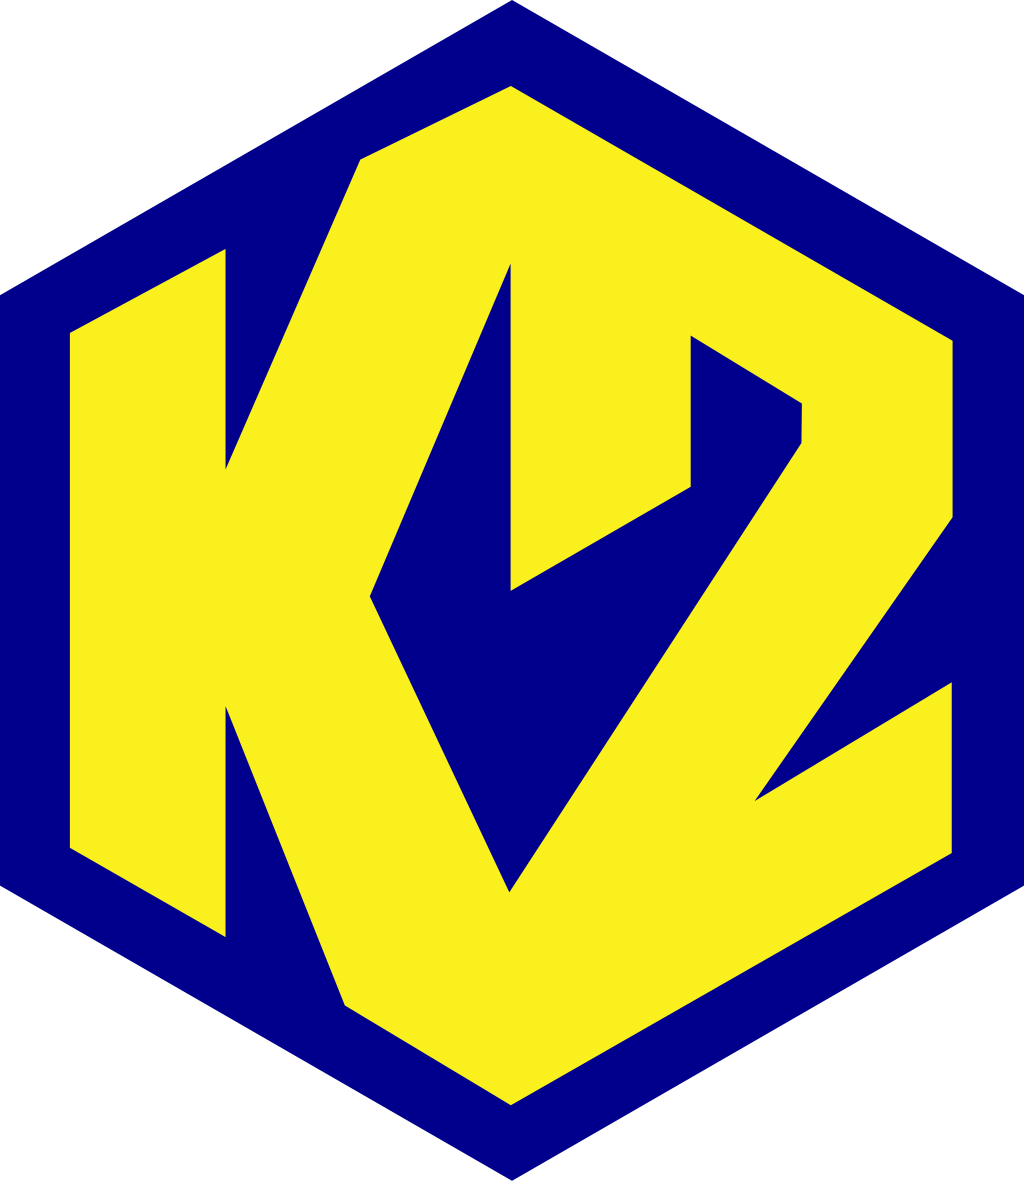 K2 (rete televisiva) - Wikiwand